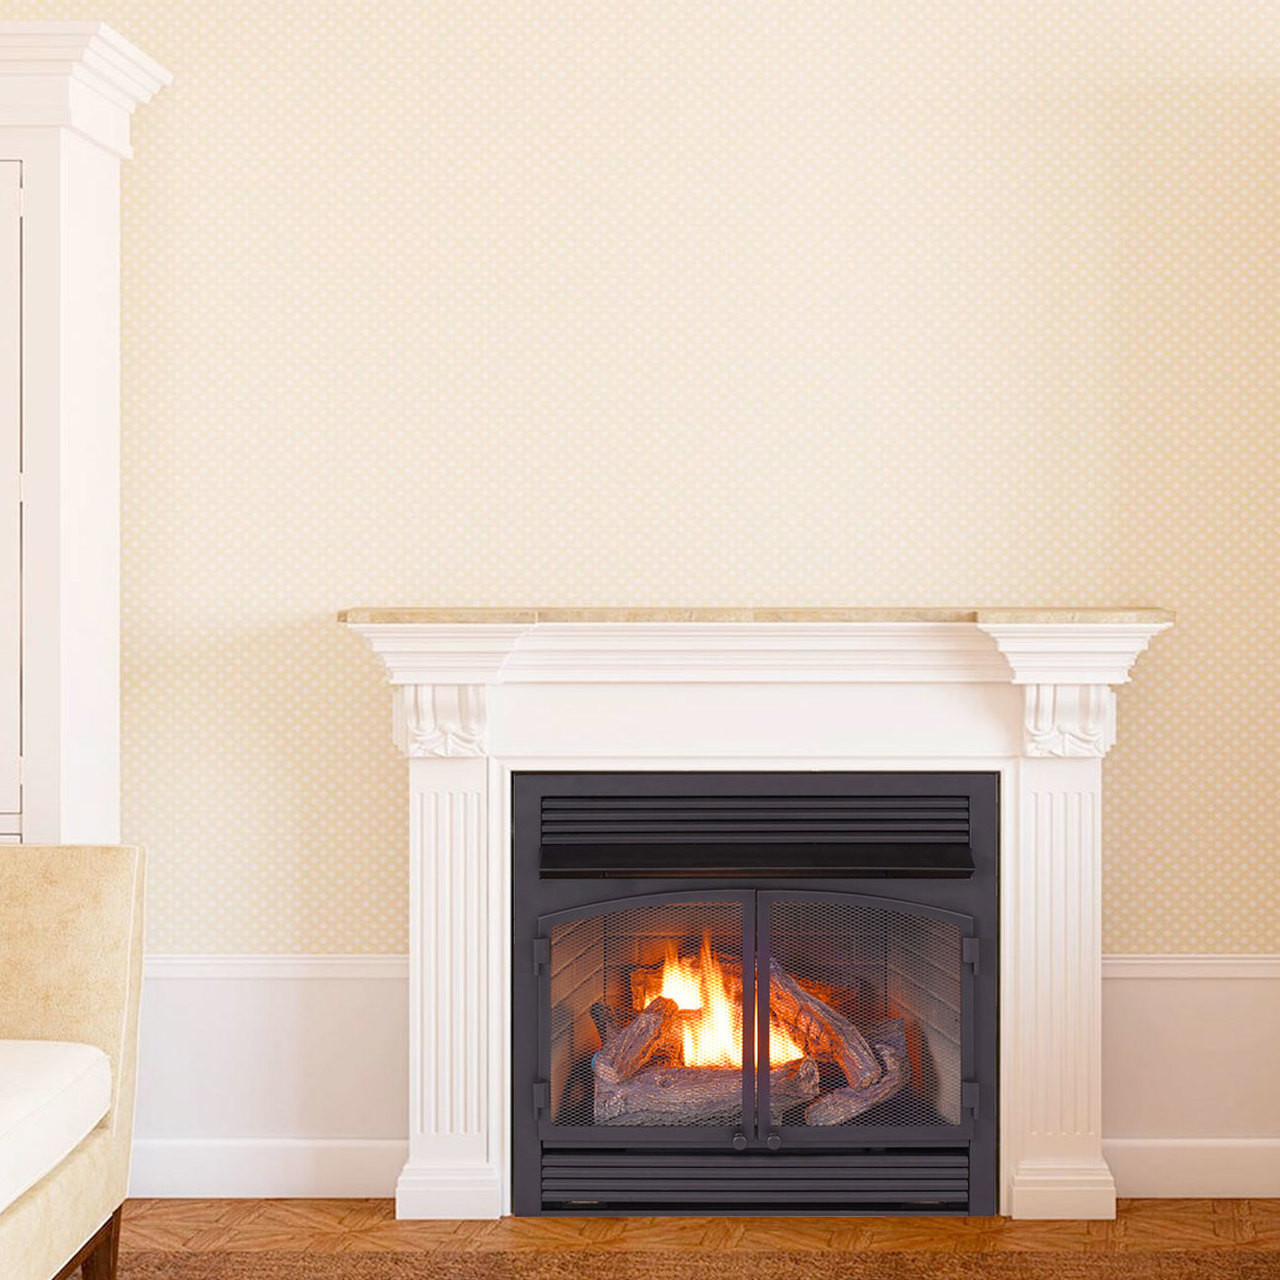 Fireplace Digital Thermostat –